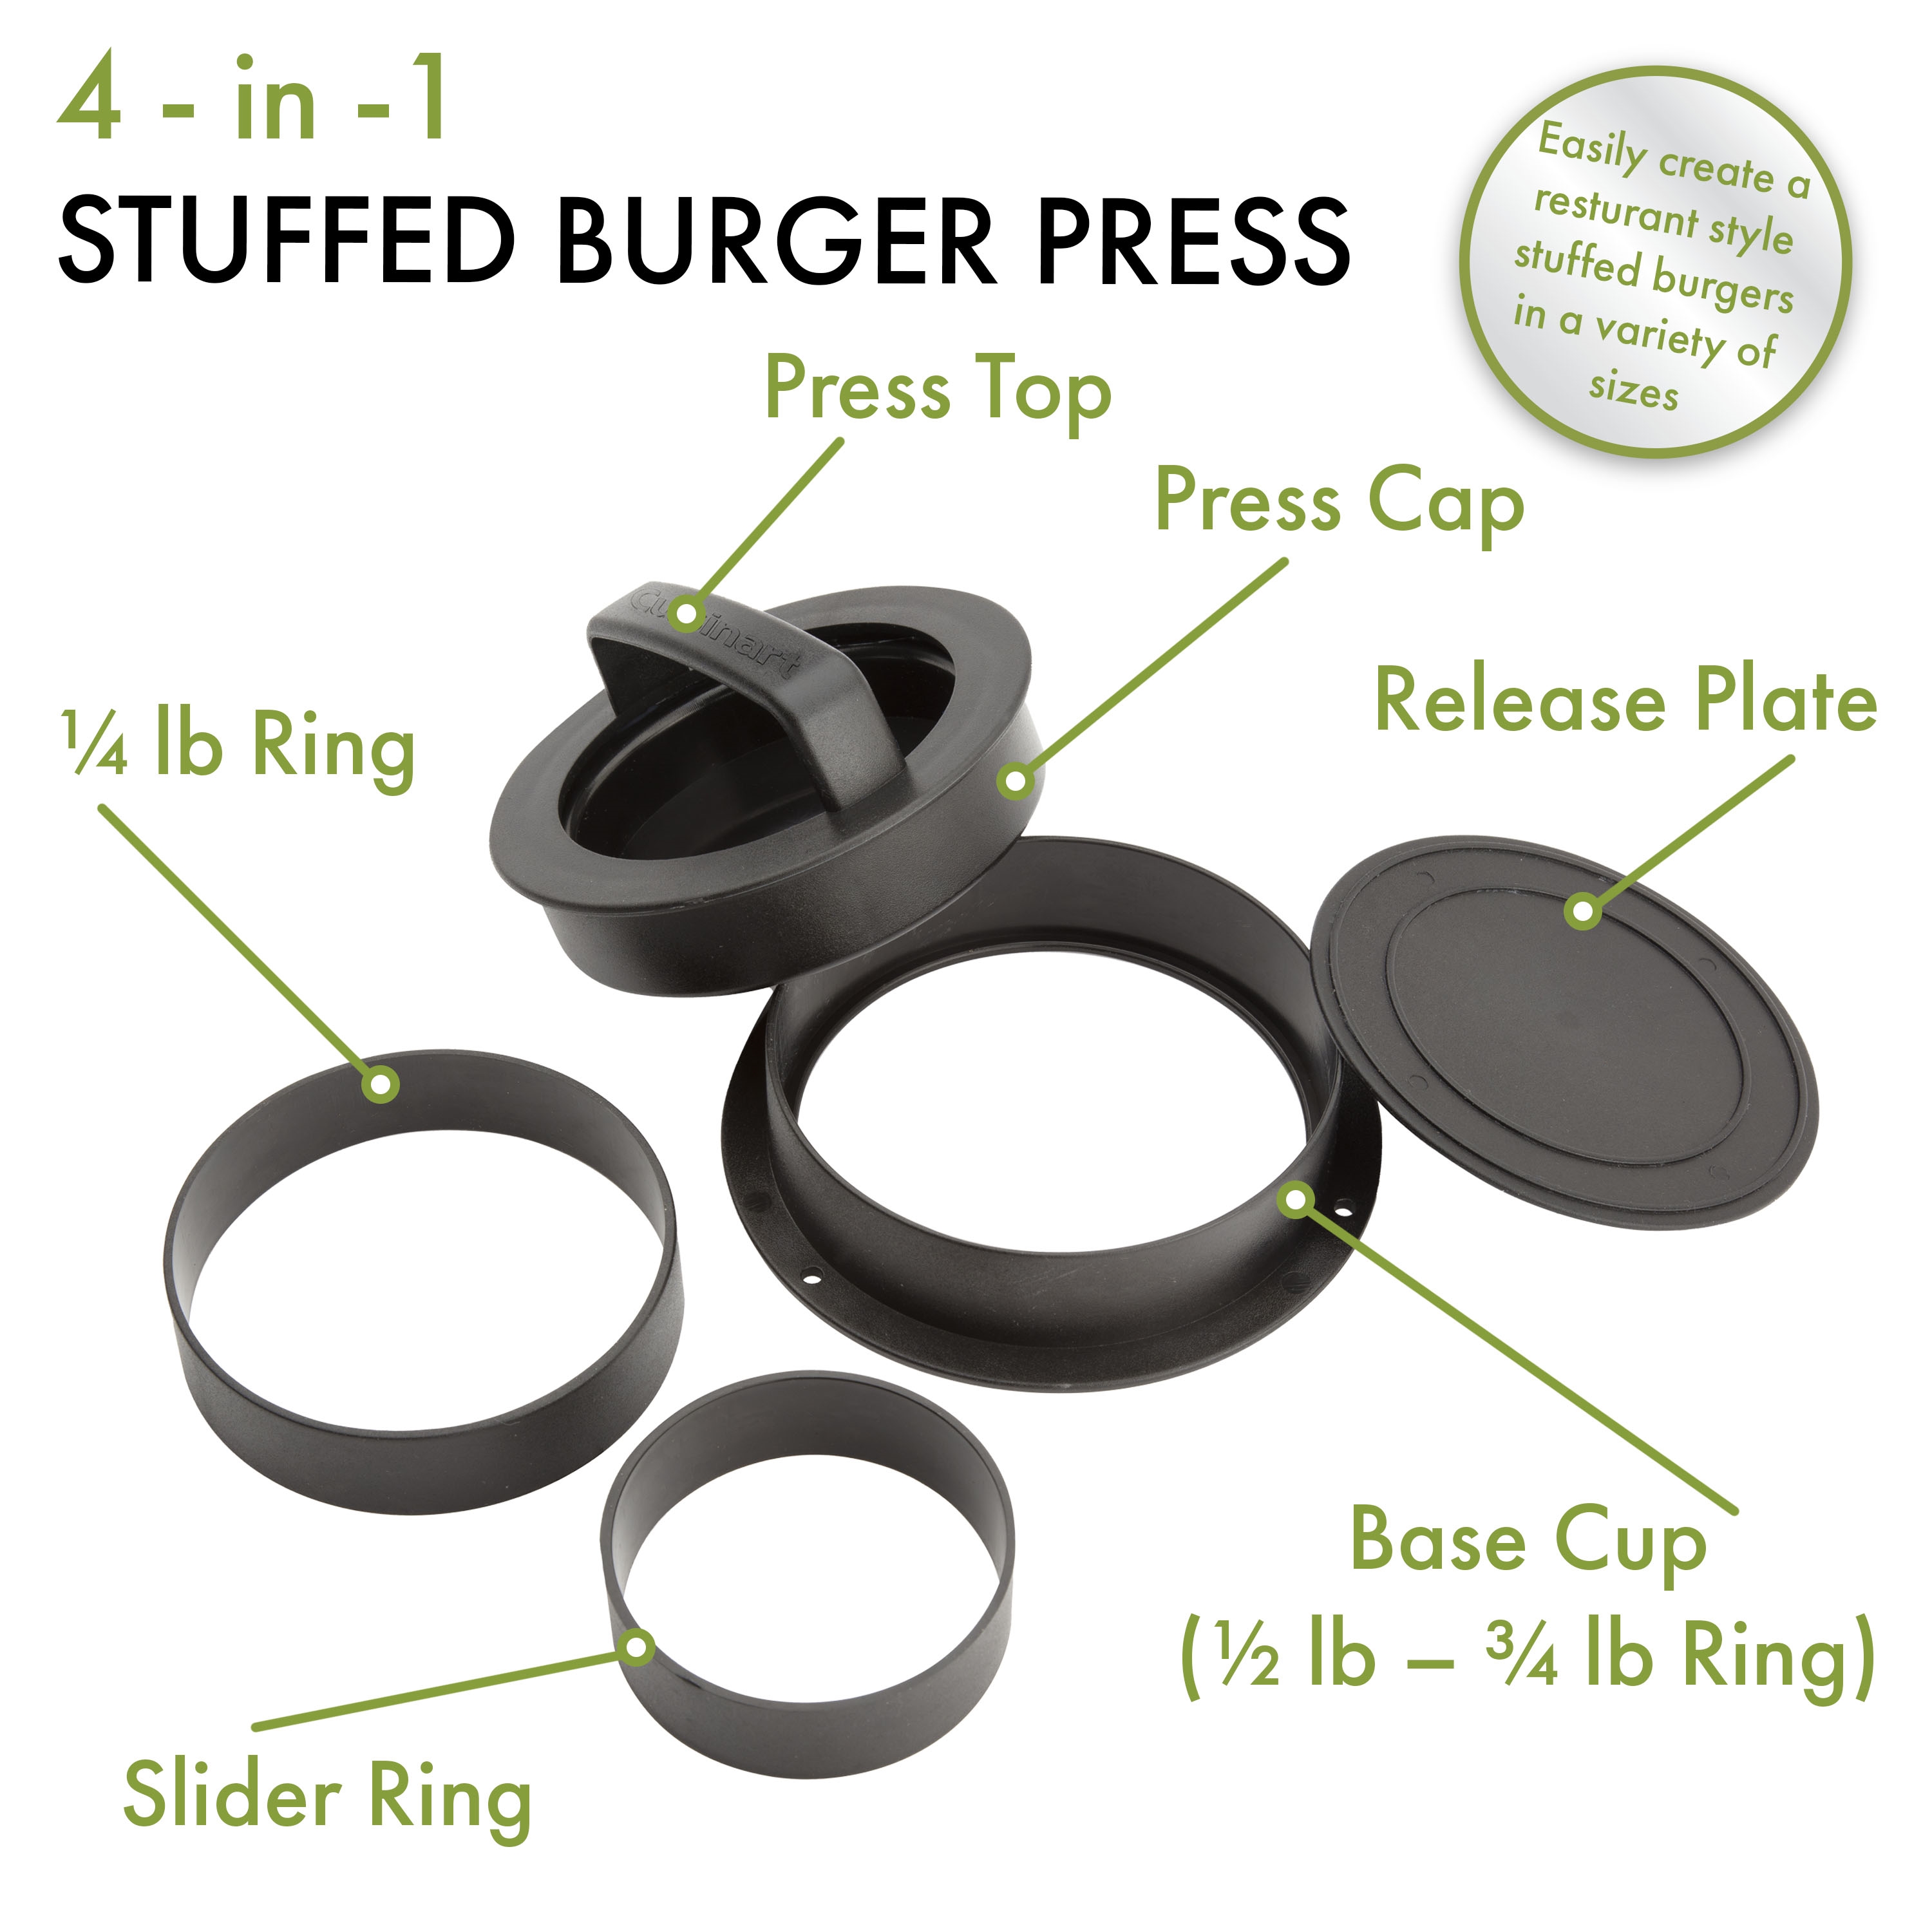 4-in-1 Stuffed Burger Press